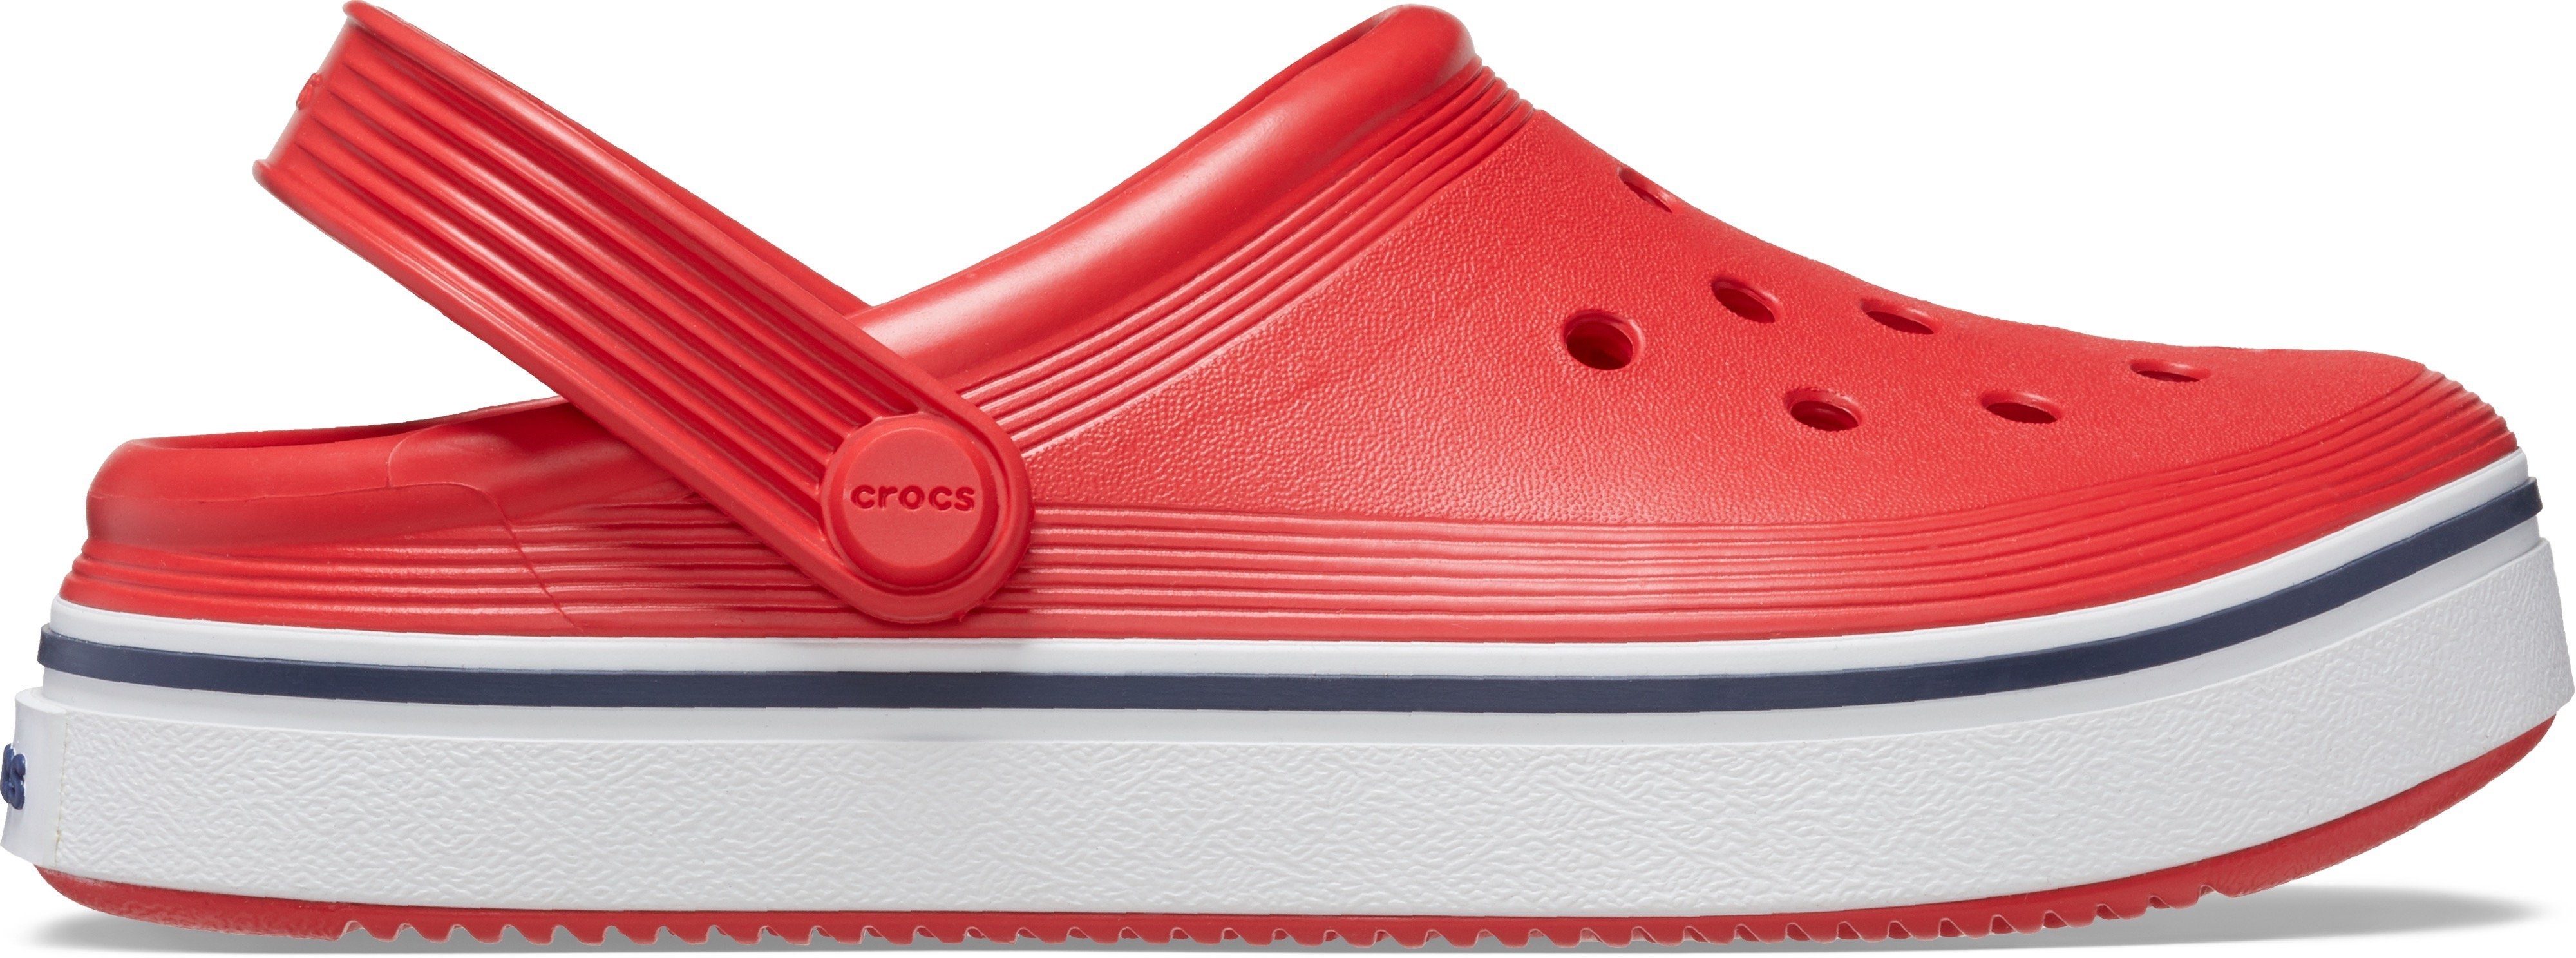 K Clog coolem Crocband Clog Farbeinsatz Crocs mit rot Clean